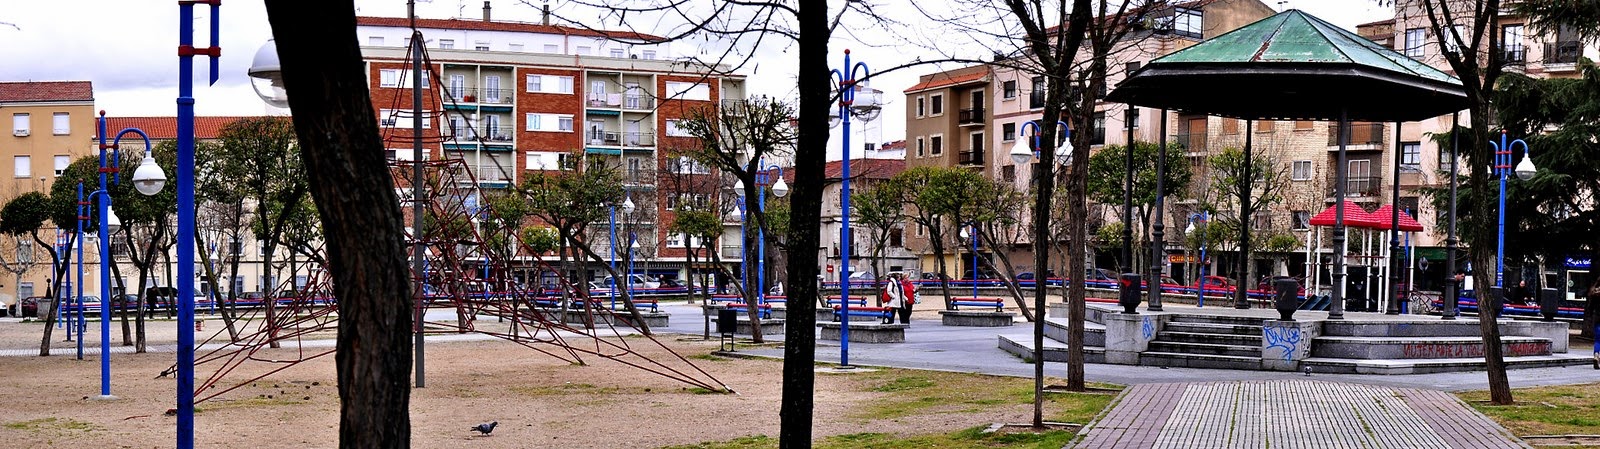 Parque de Garrido, salamanca, bici